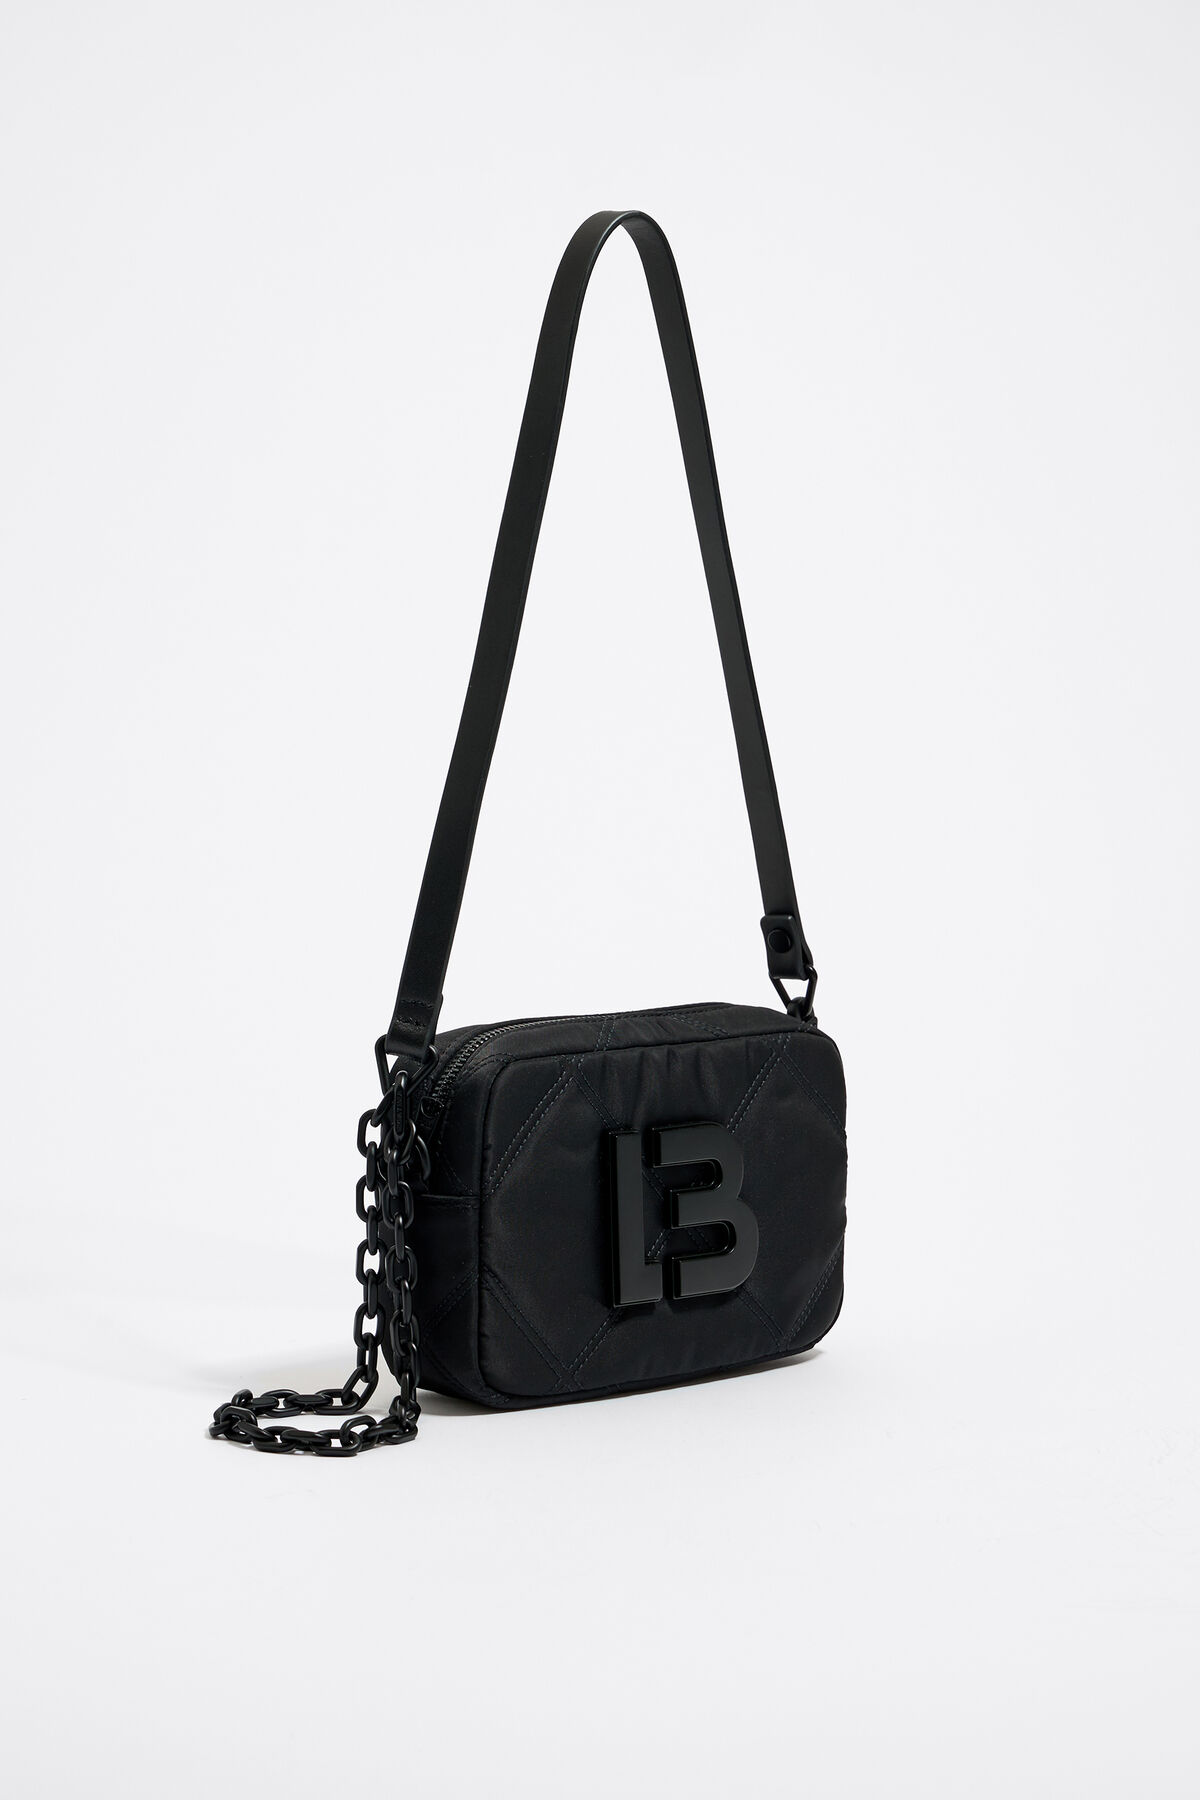 Sell Bimba Y Lola Crossbody Bag - Black